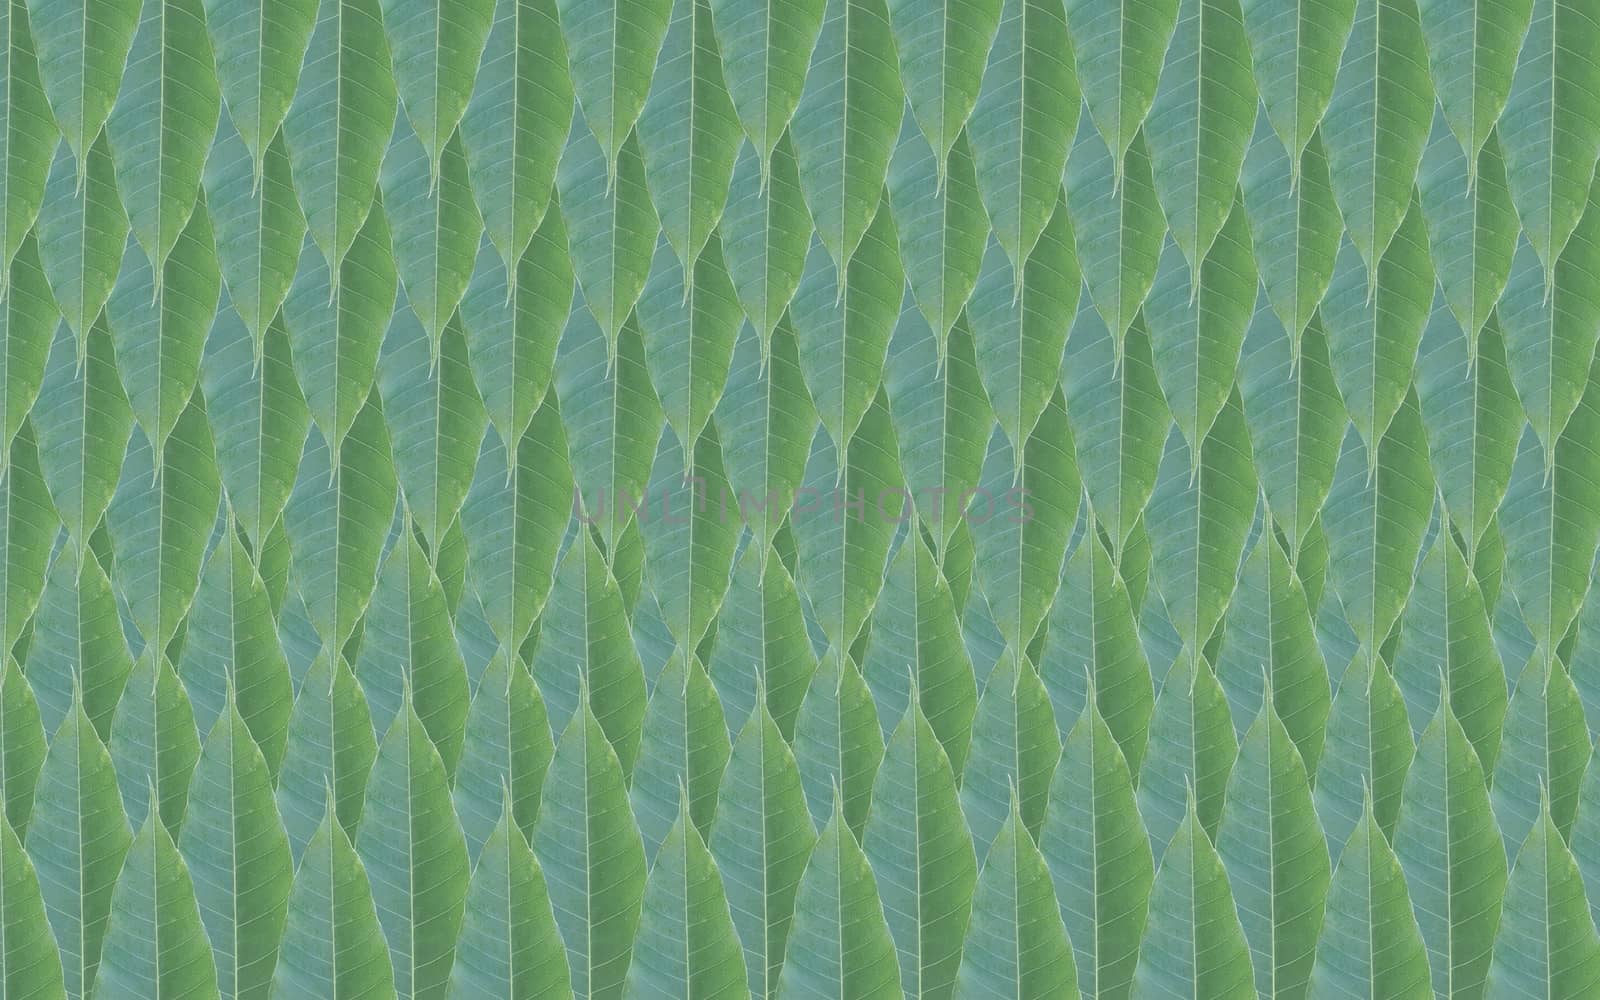 background made of fresh green leaf pattern.